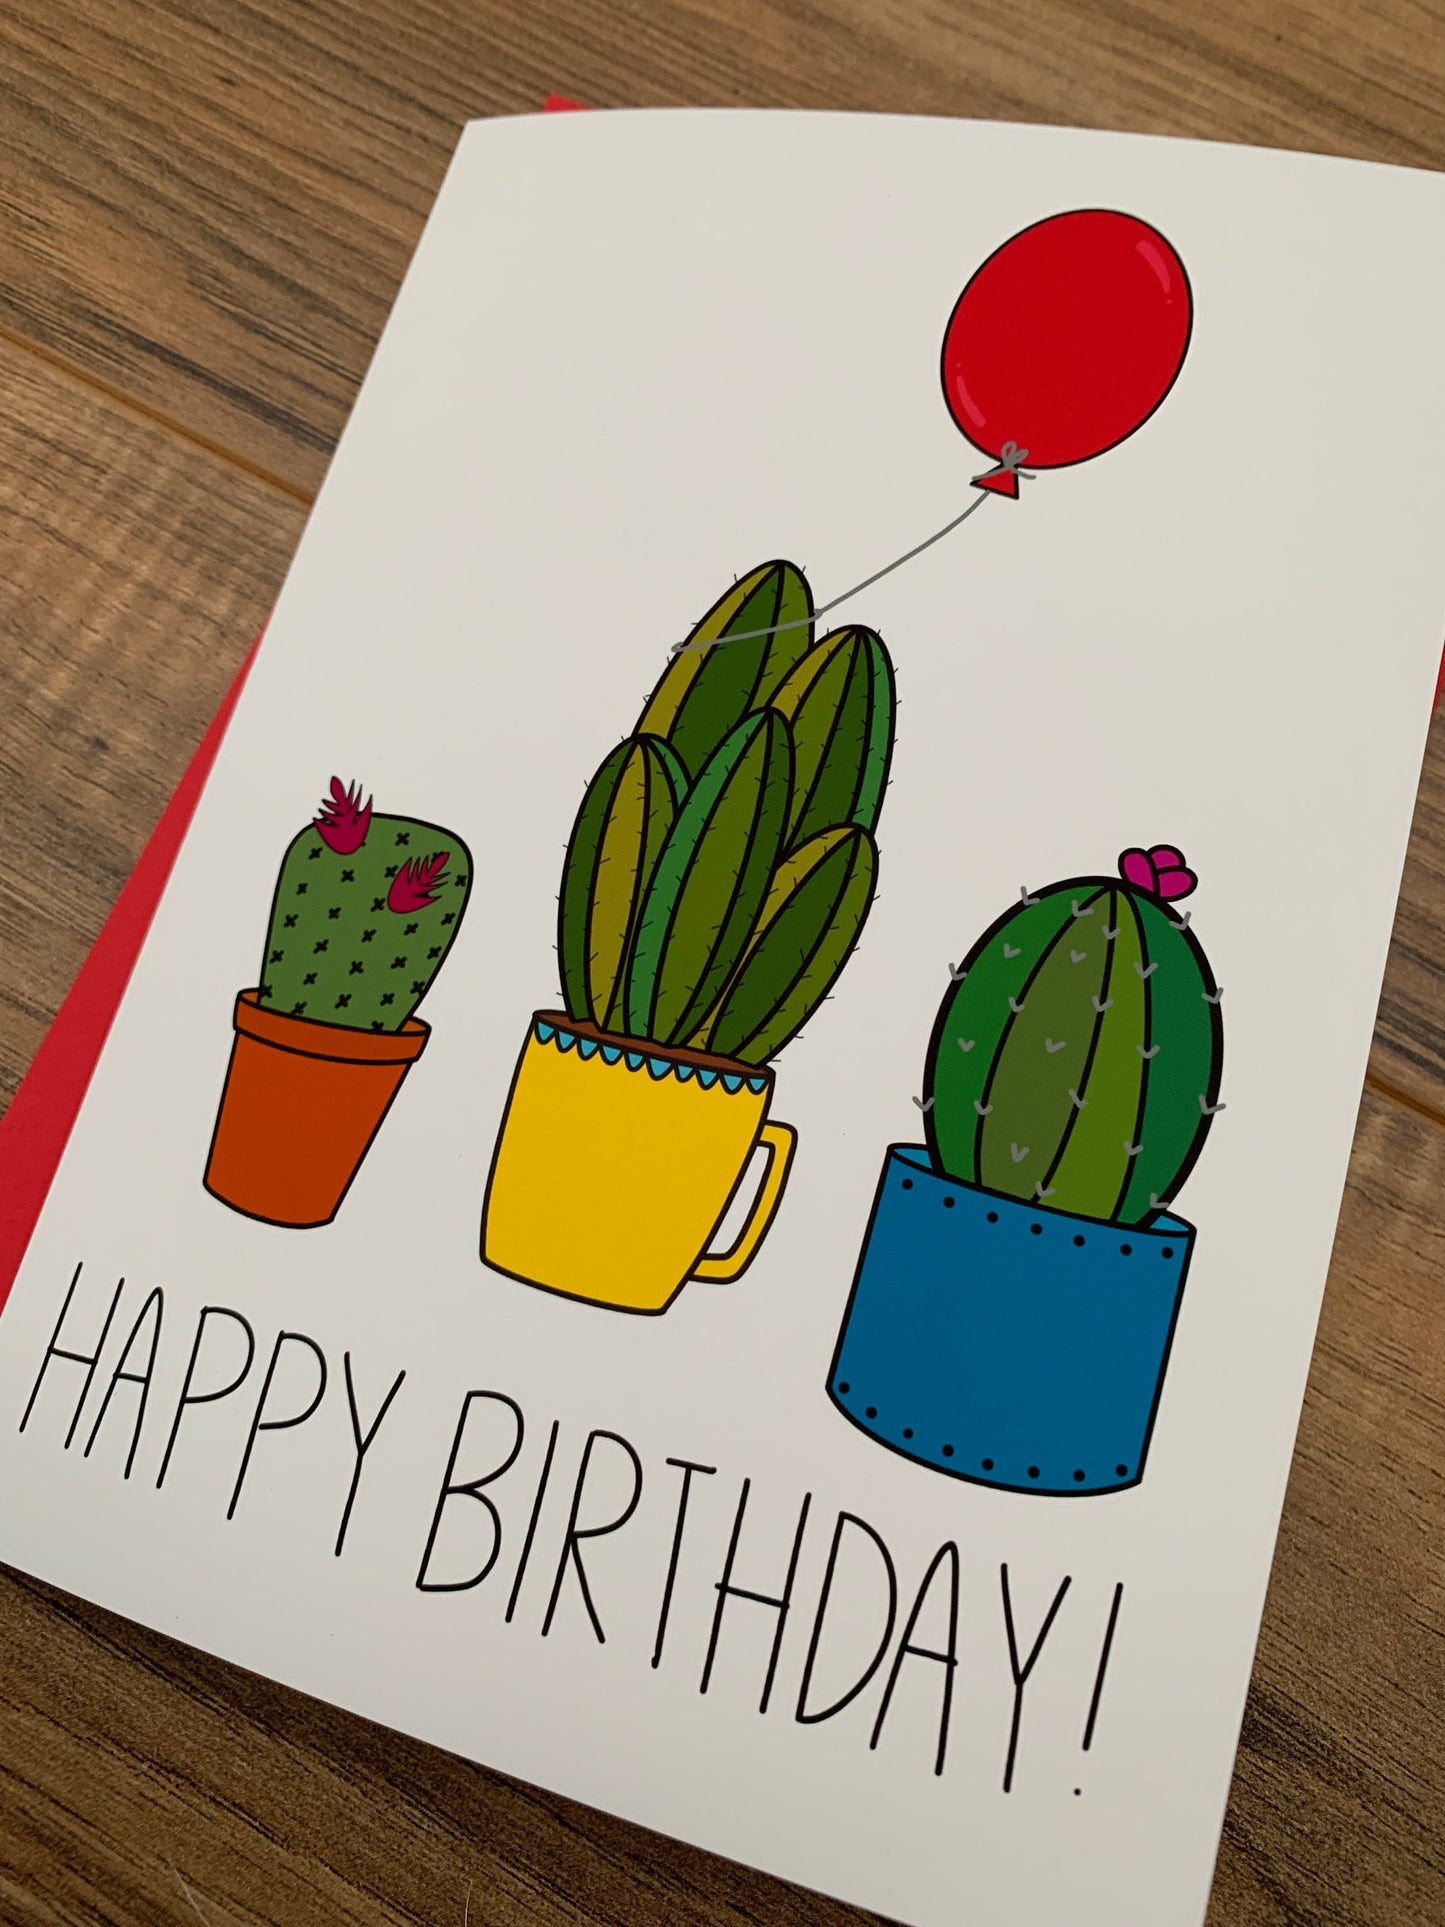 Handmade Succulent and Cactus Birthday Card by StoneDonut Design